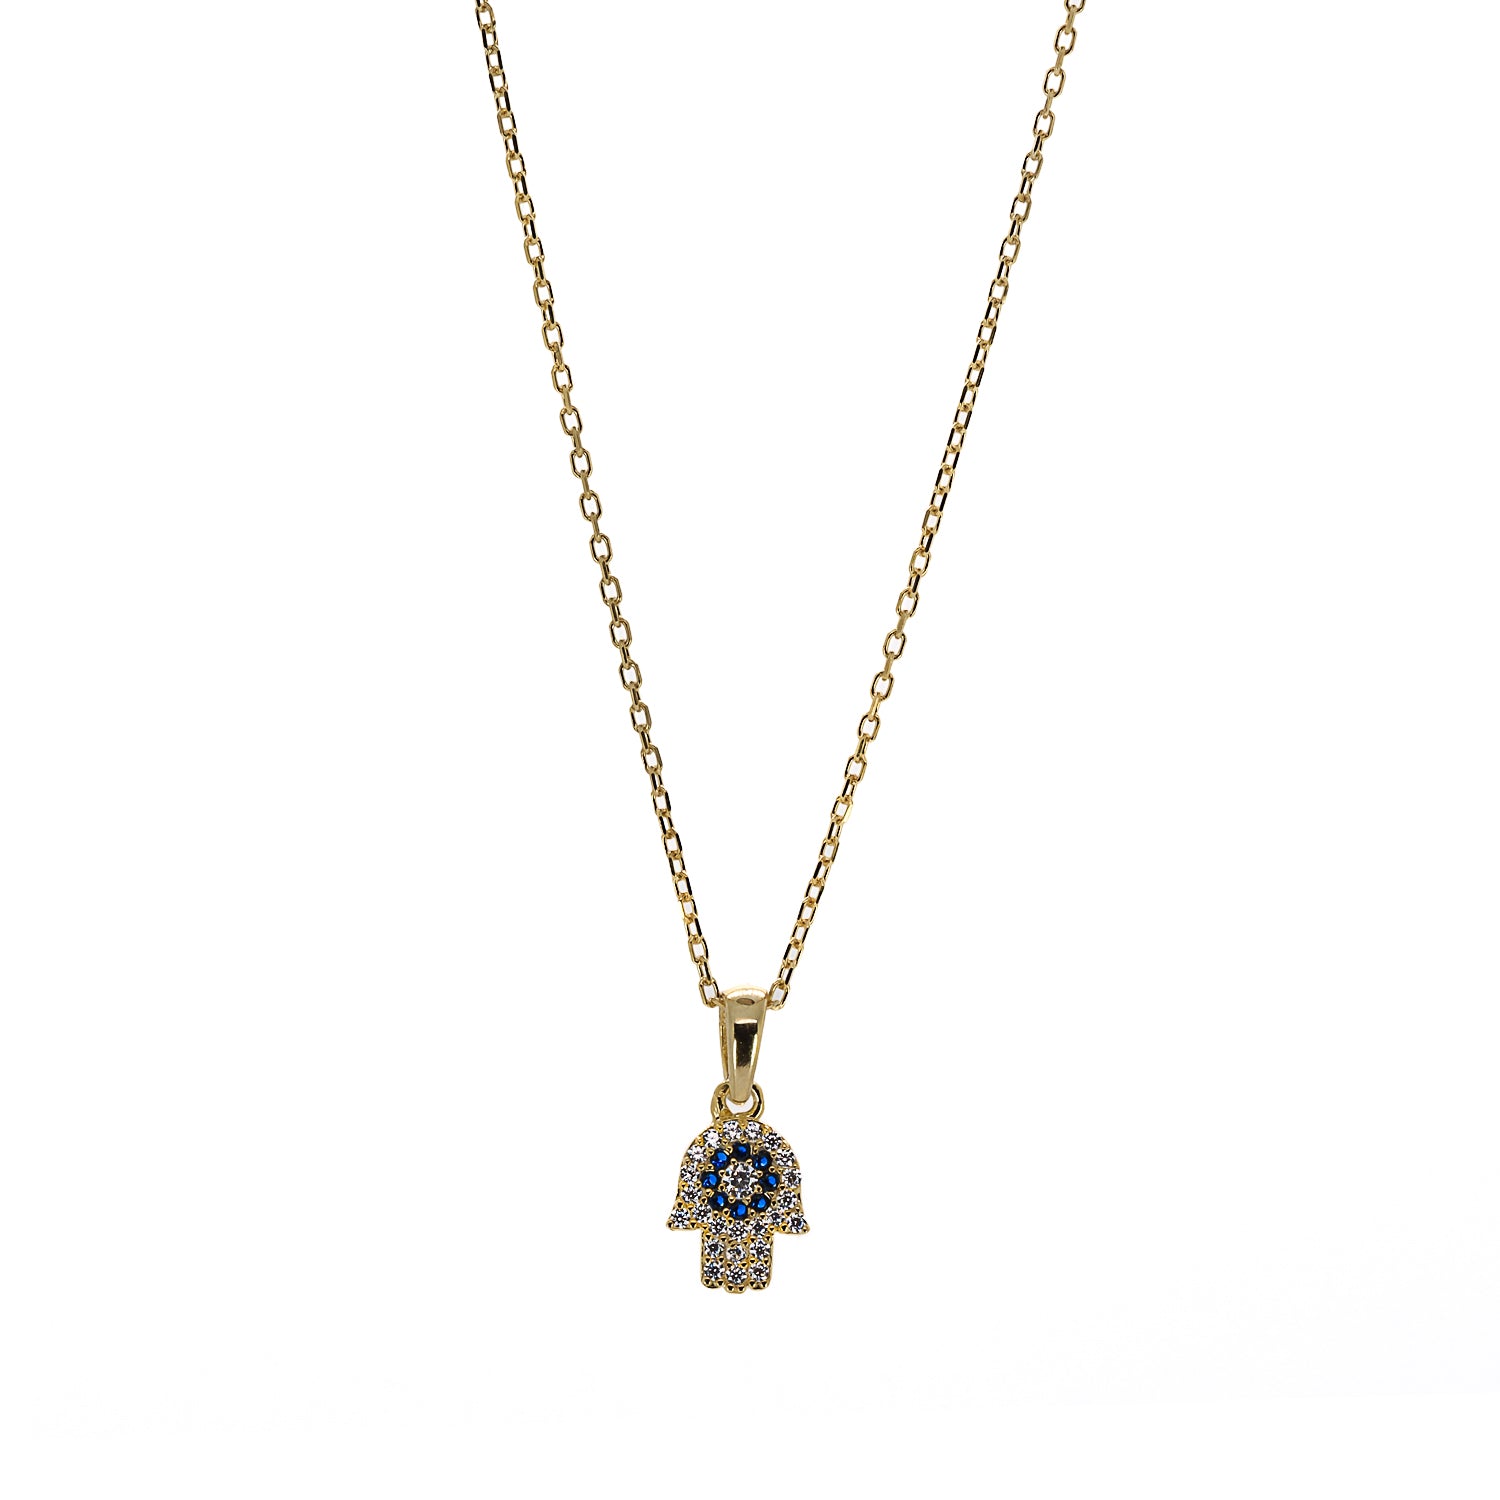 Mini Hamsa Hand Necklace - A Thoughtful Gift Choice or a Stylish Accessory.